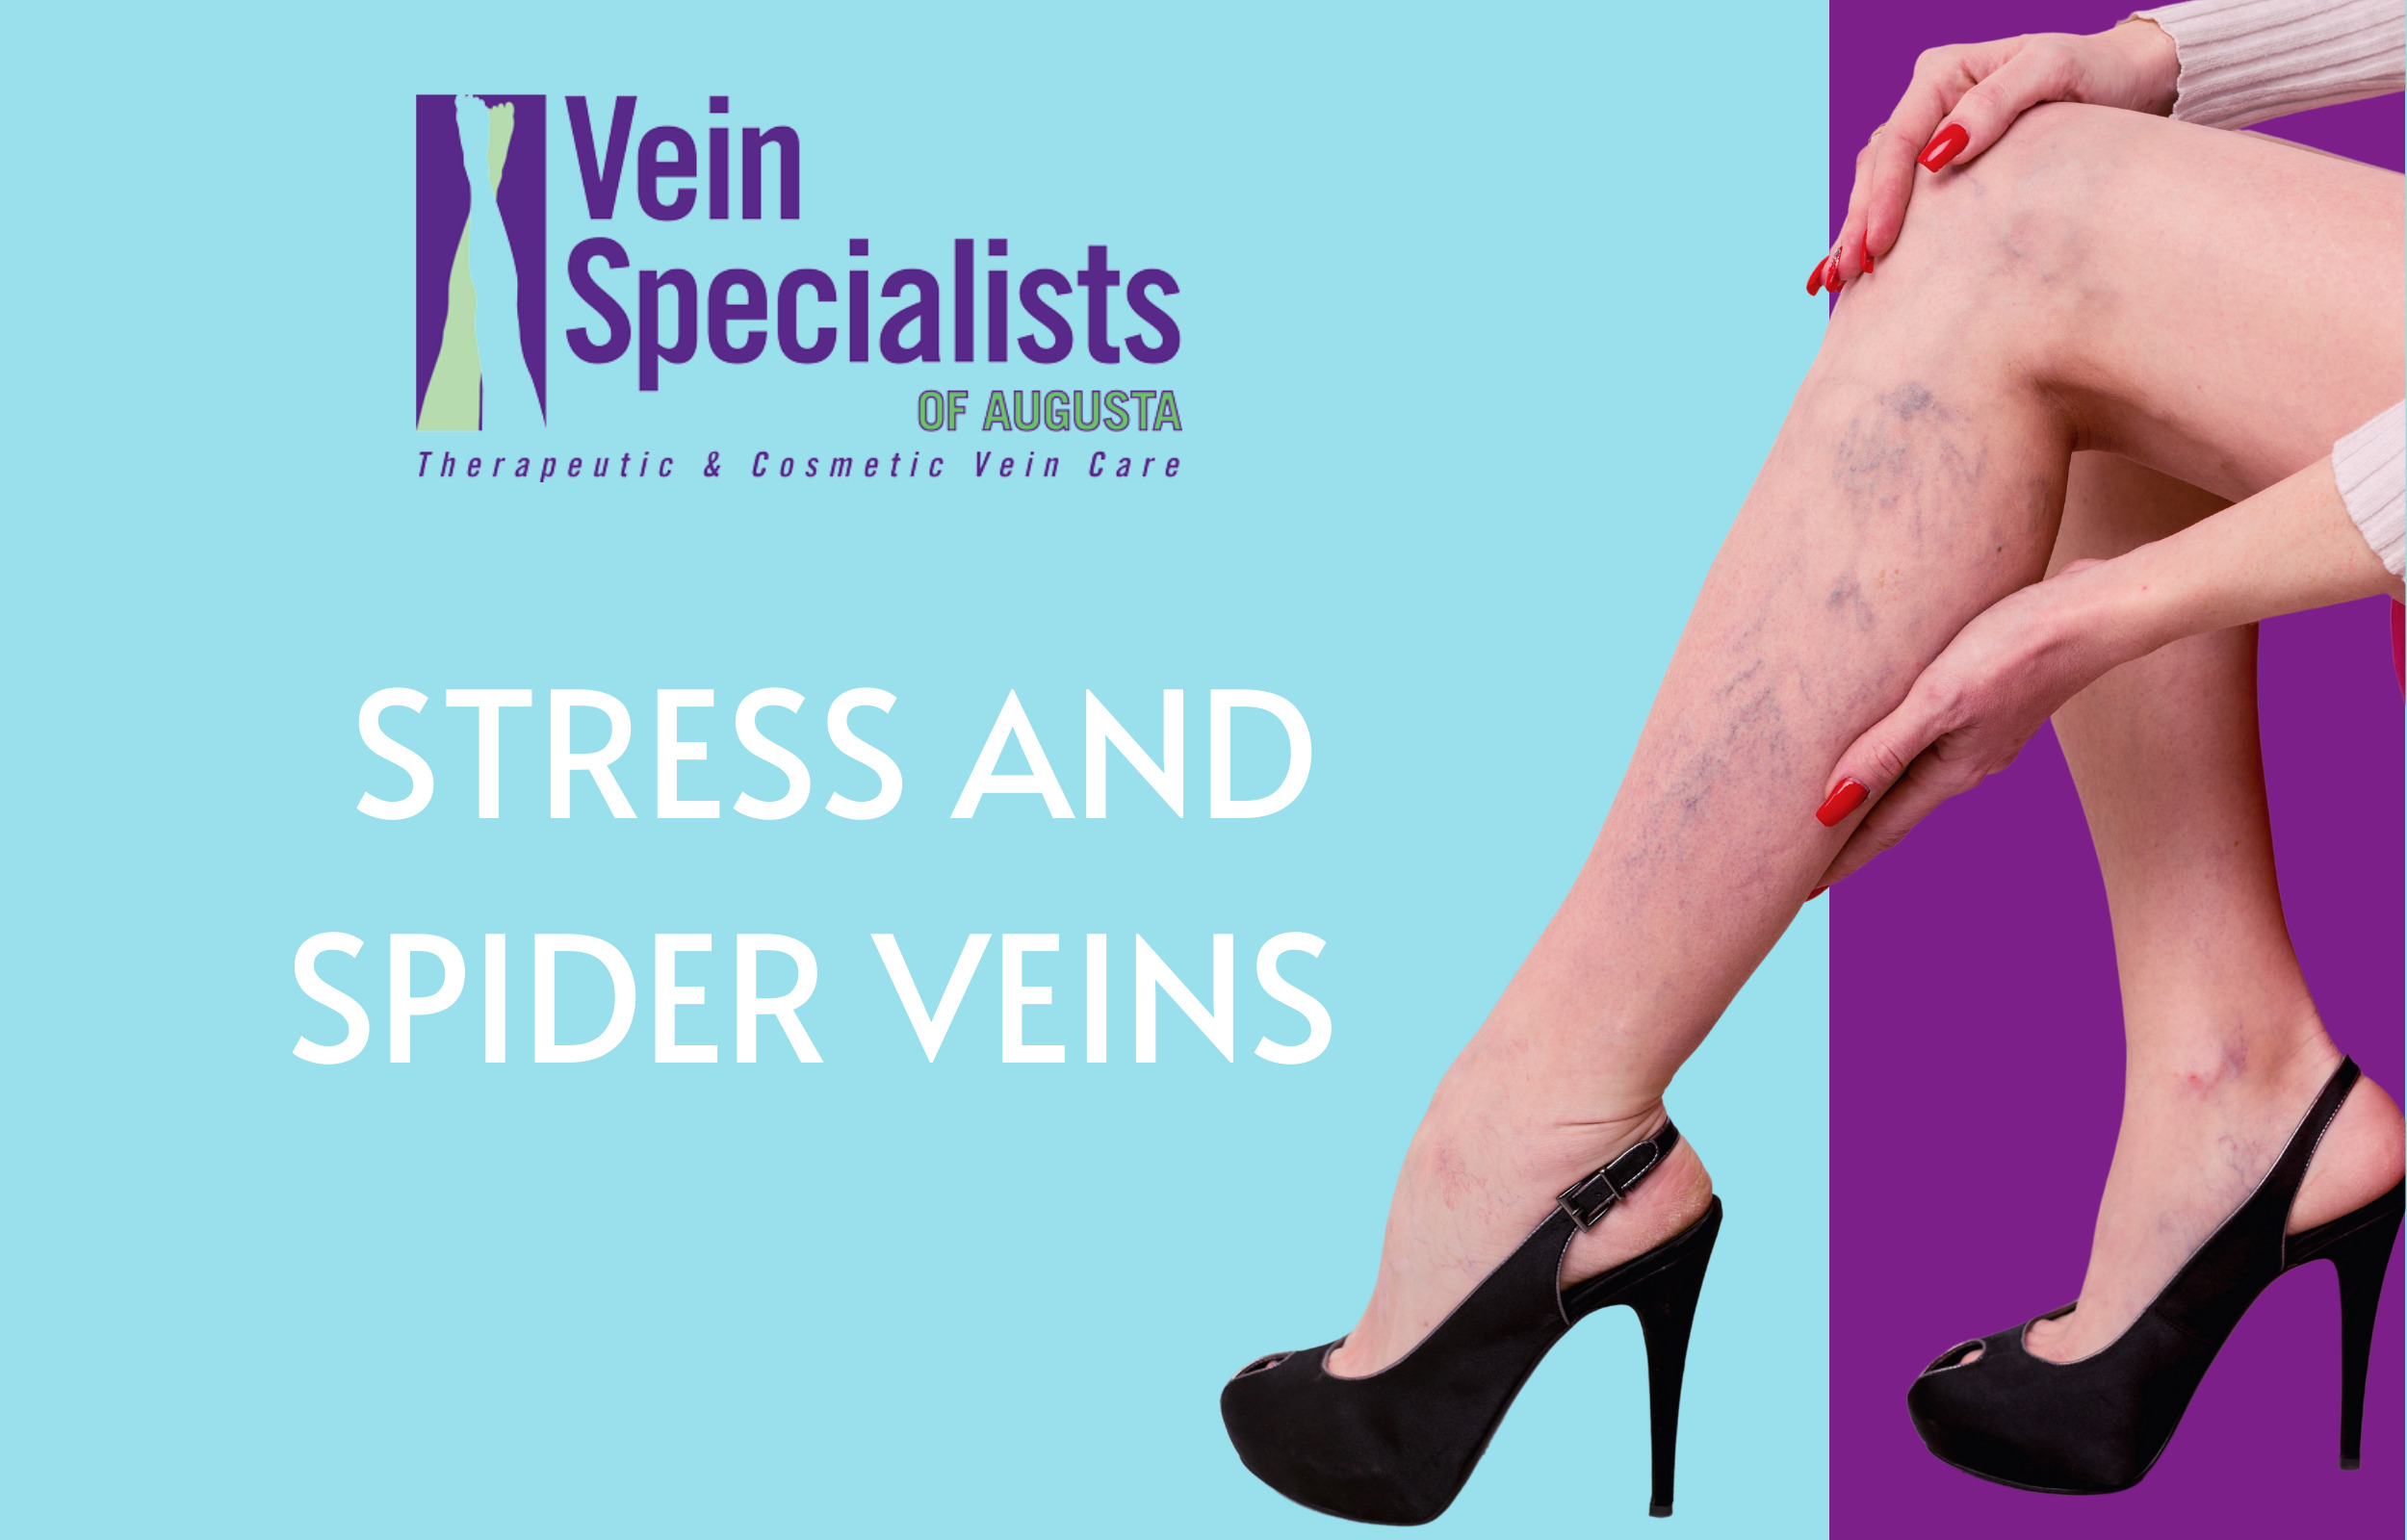 Can Stress Cause Spider Veins On Legs? - Vein Specialists of Augusta